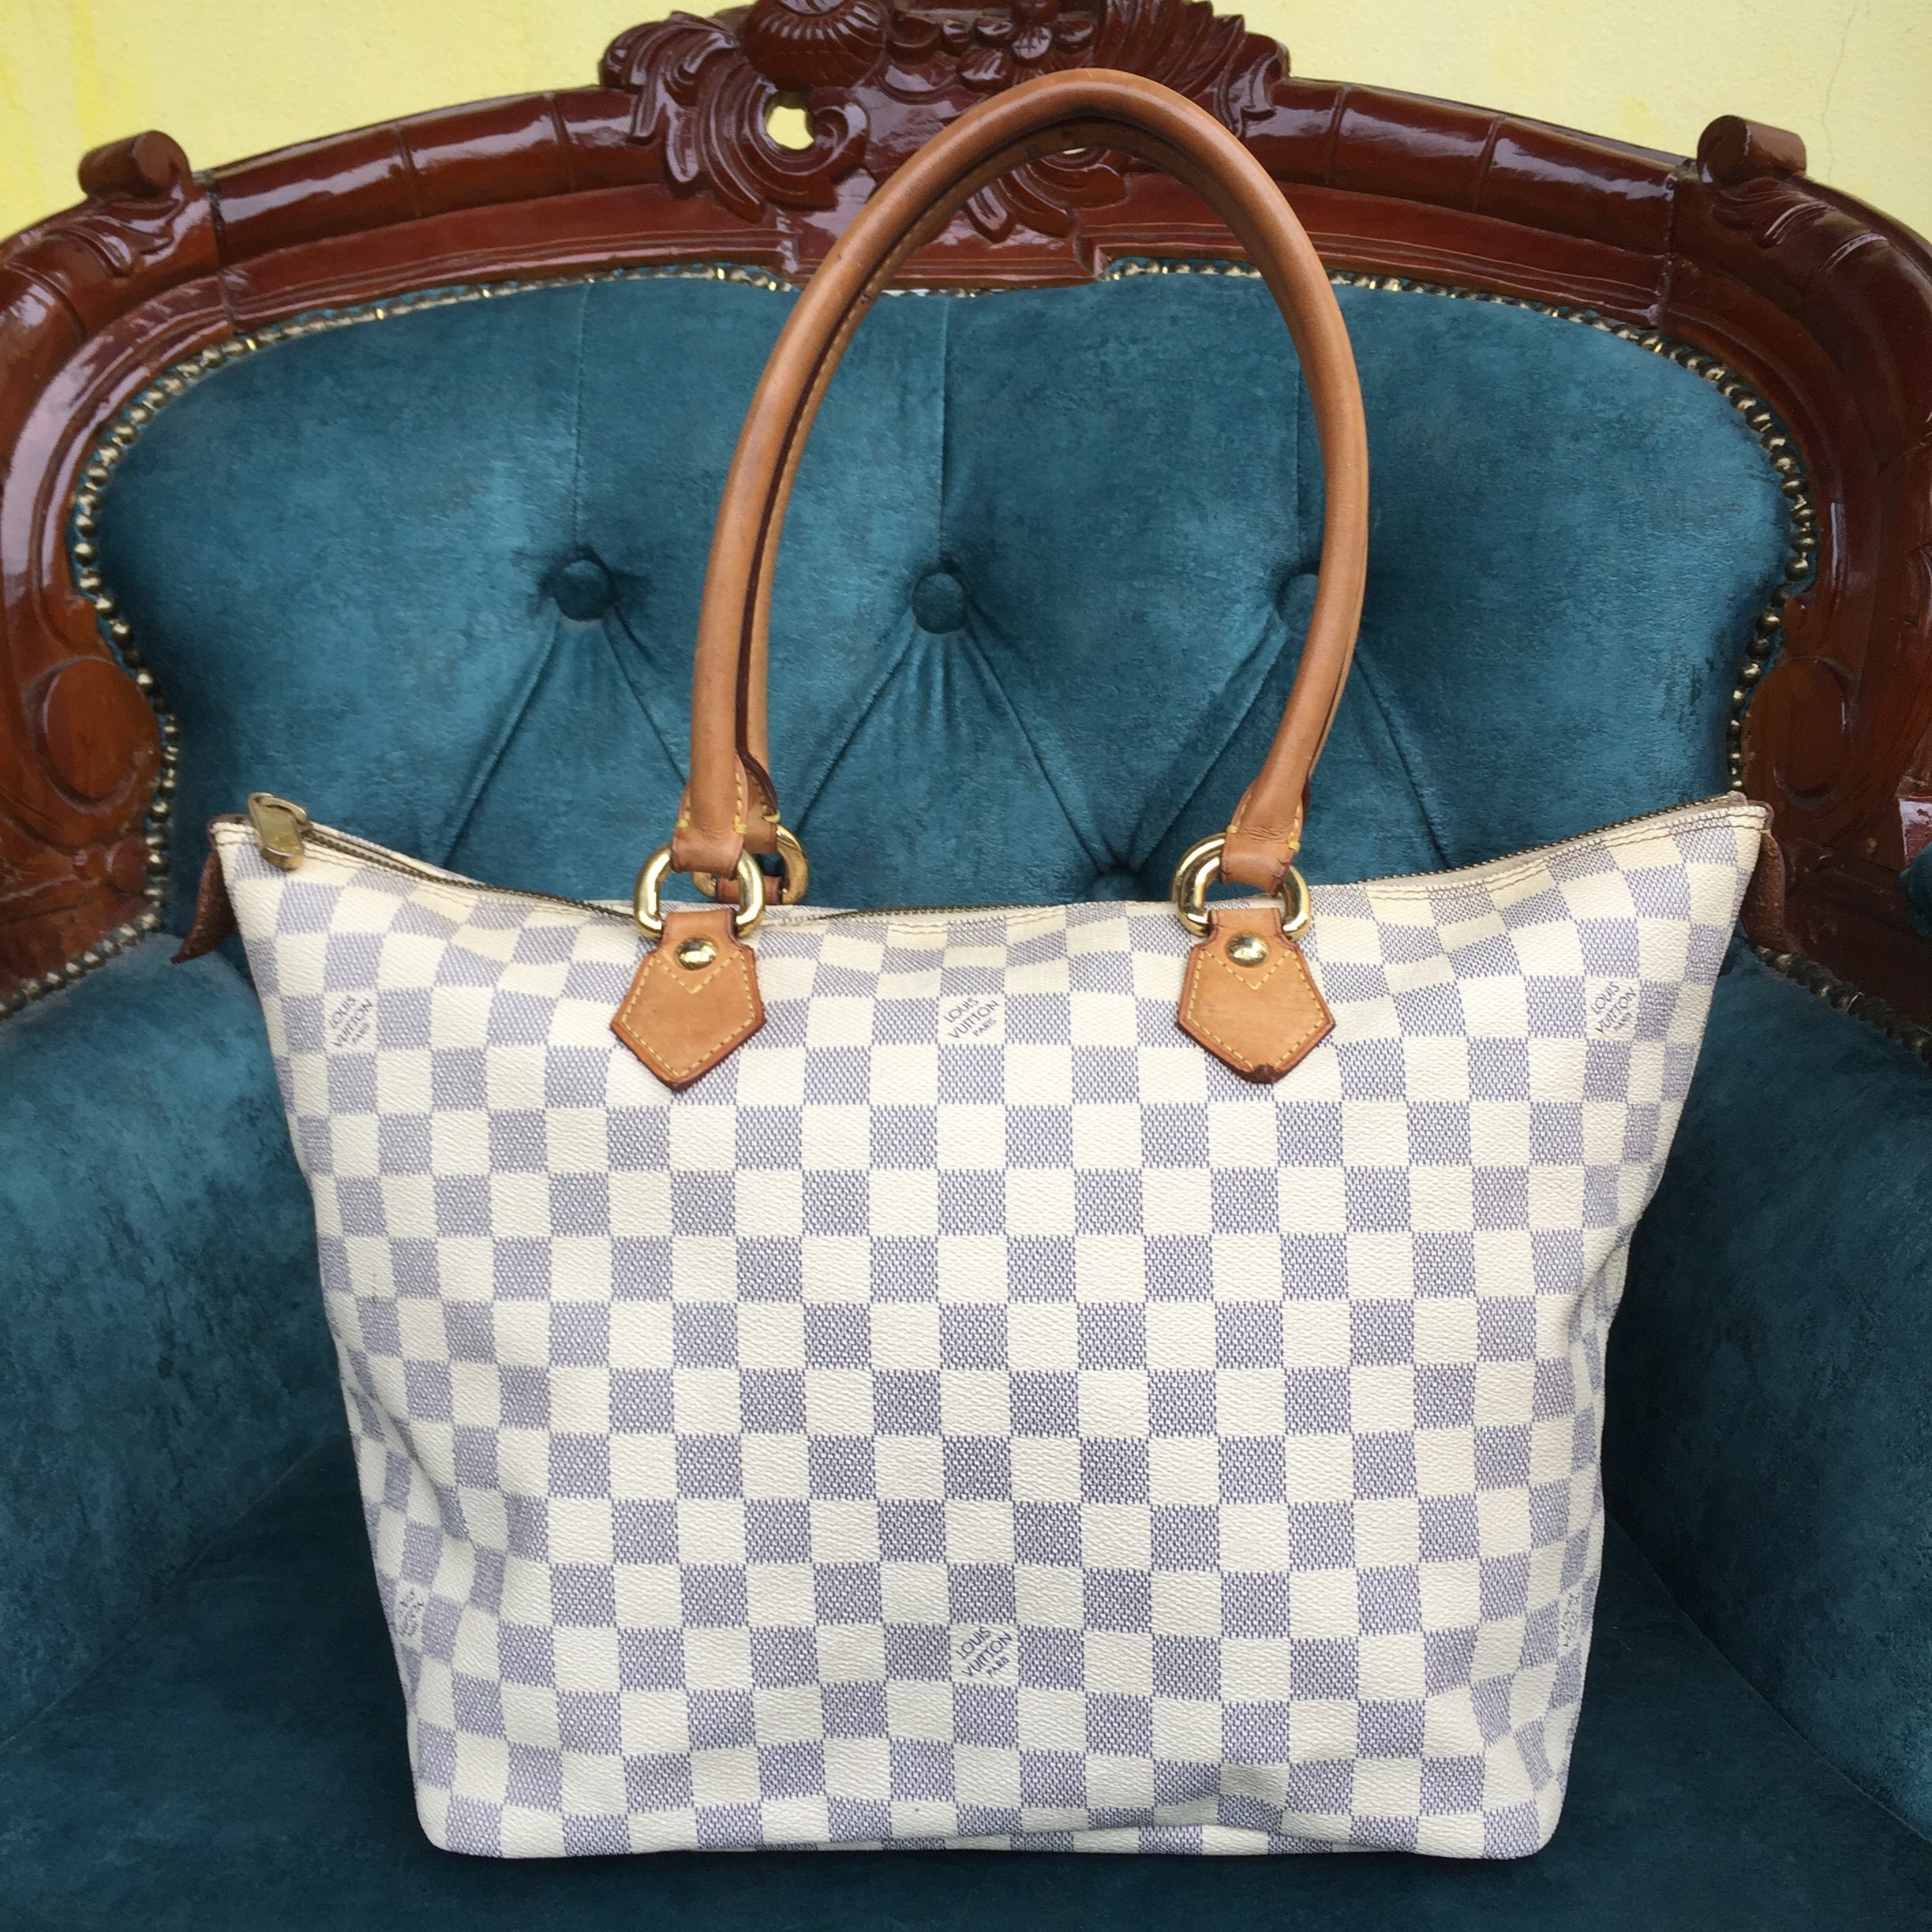 Buy Vintage Louis Vuitton Handbag Online In India -  India